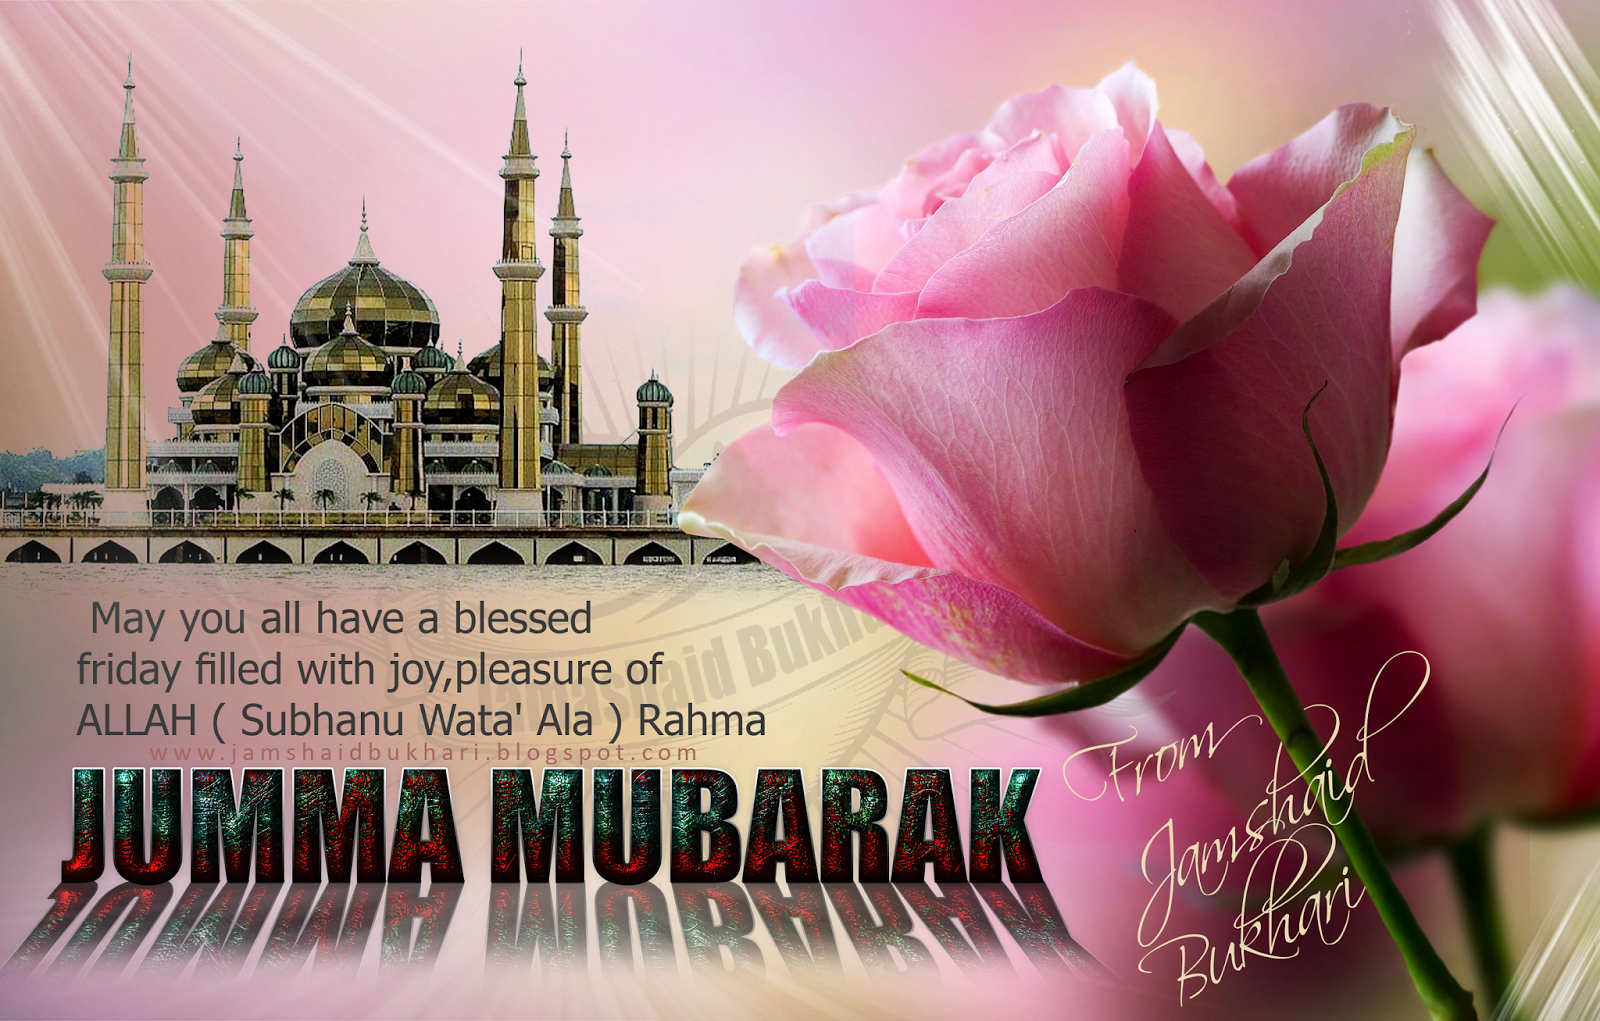 Free download Jumma Mubarak Images And Photos Free Download Photo ...